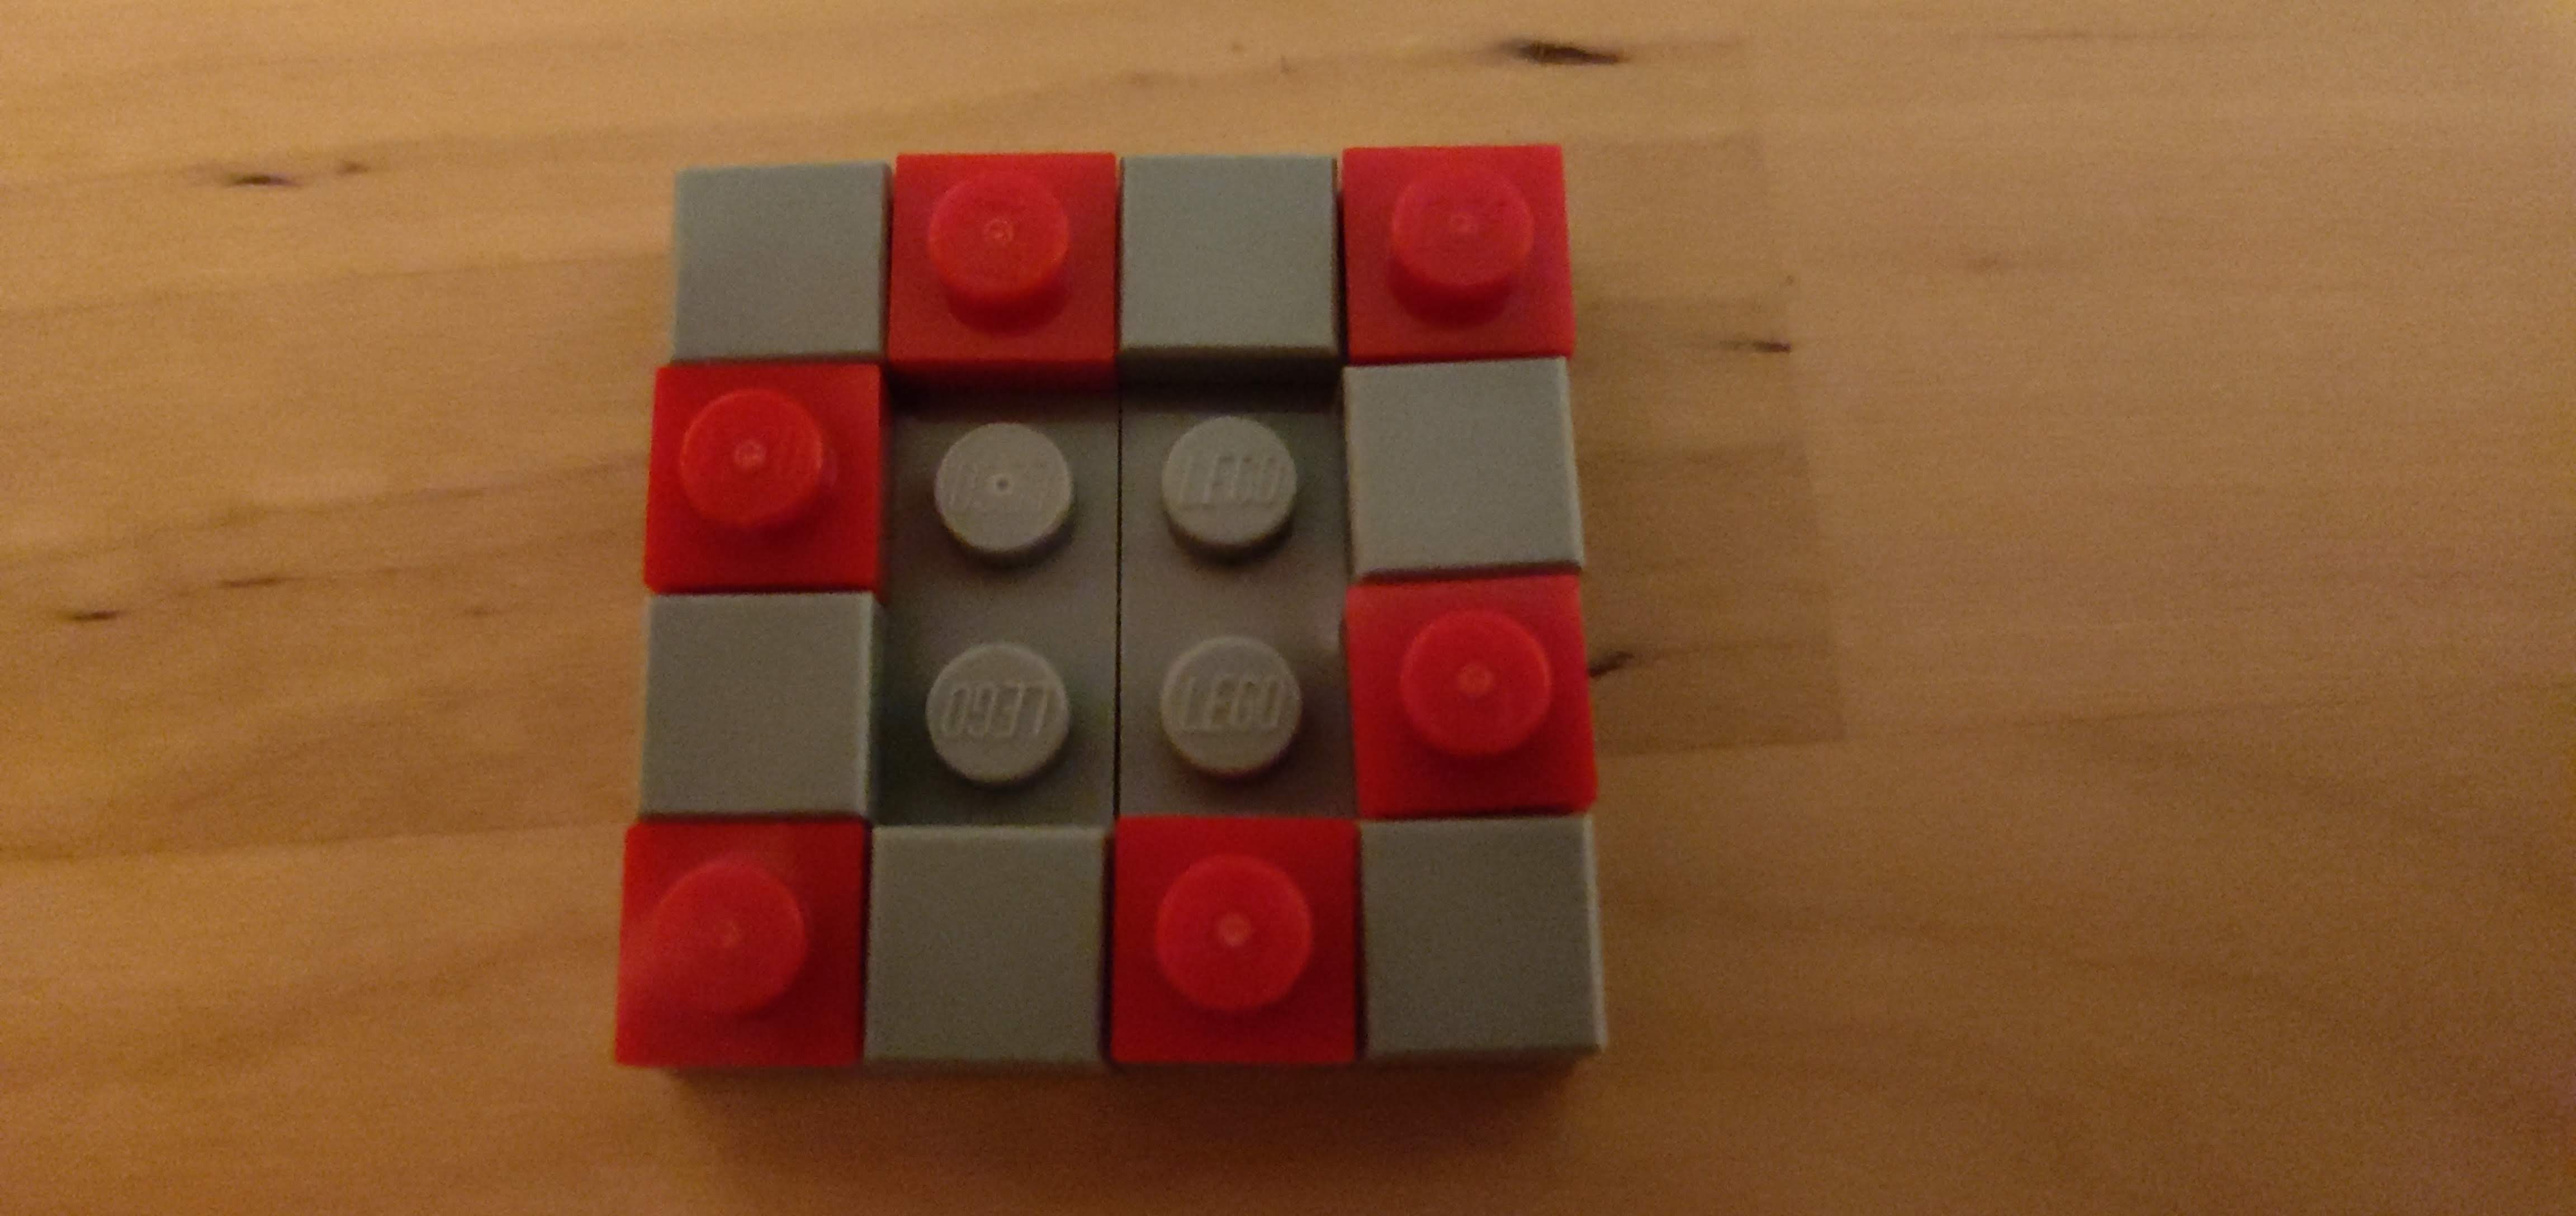 ./lego-stand-part-3.jpg